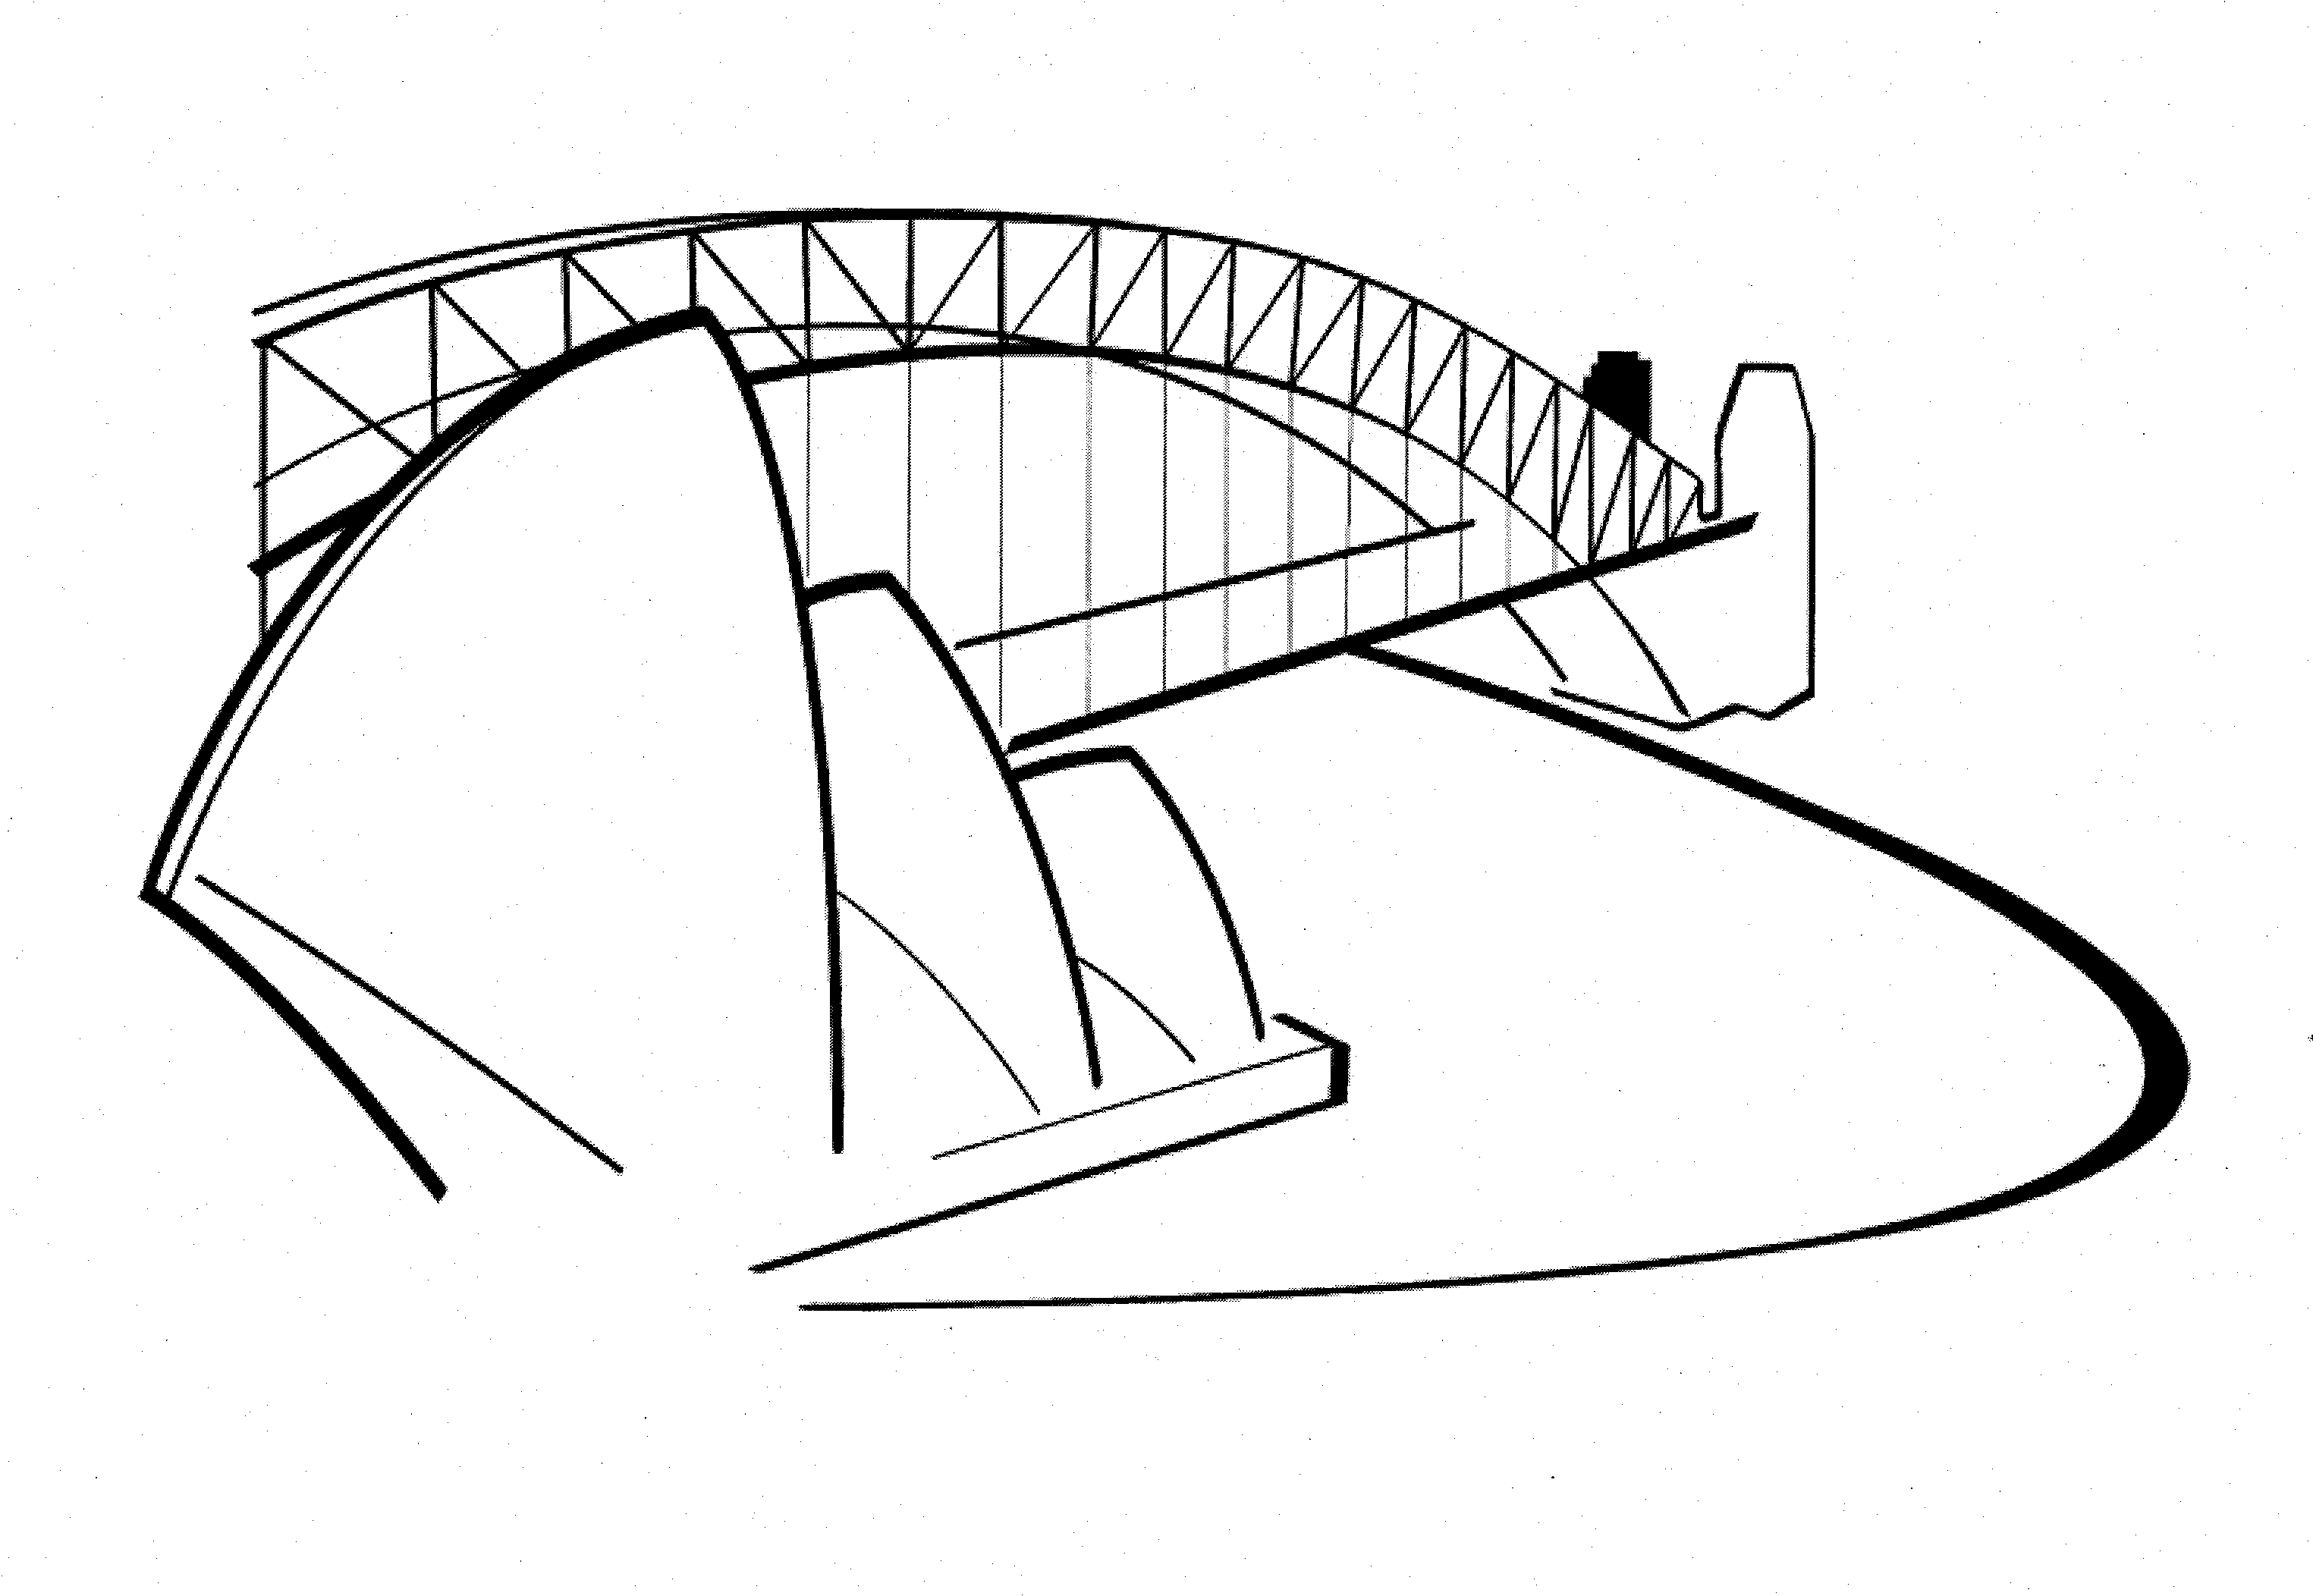 sydney opera house logo